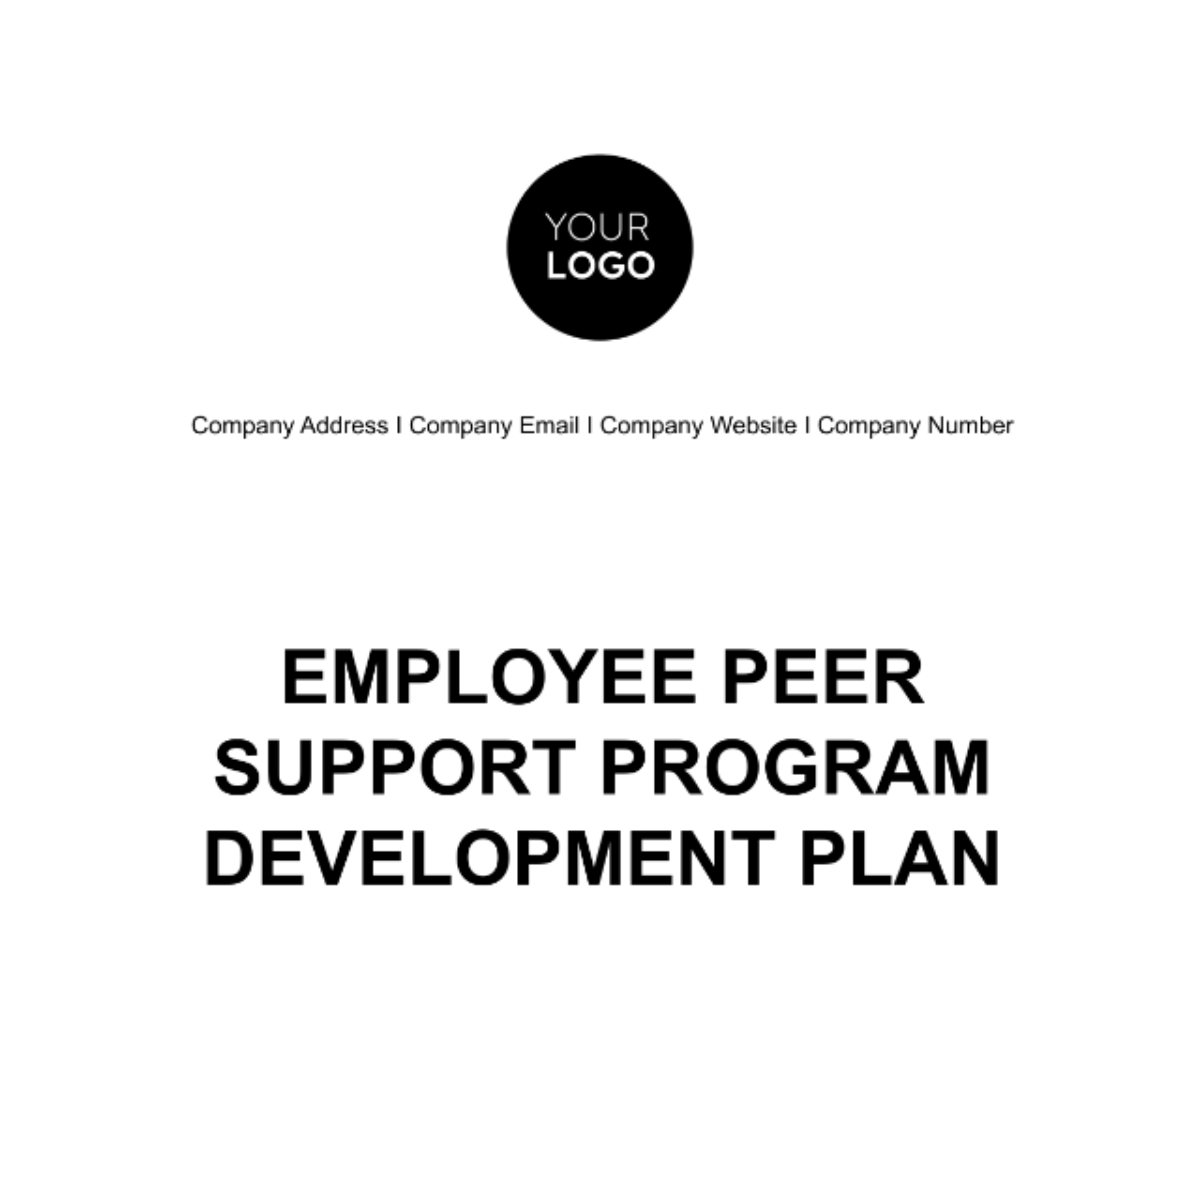 Free Employee Peer Support Program Development Plan HR Template